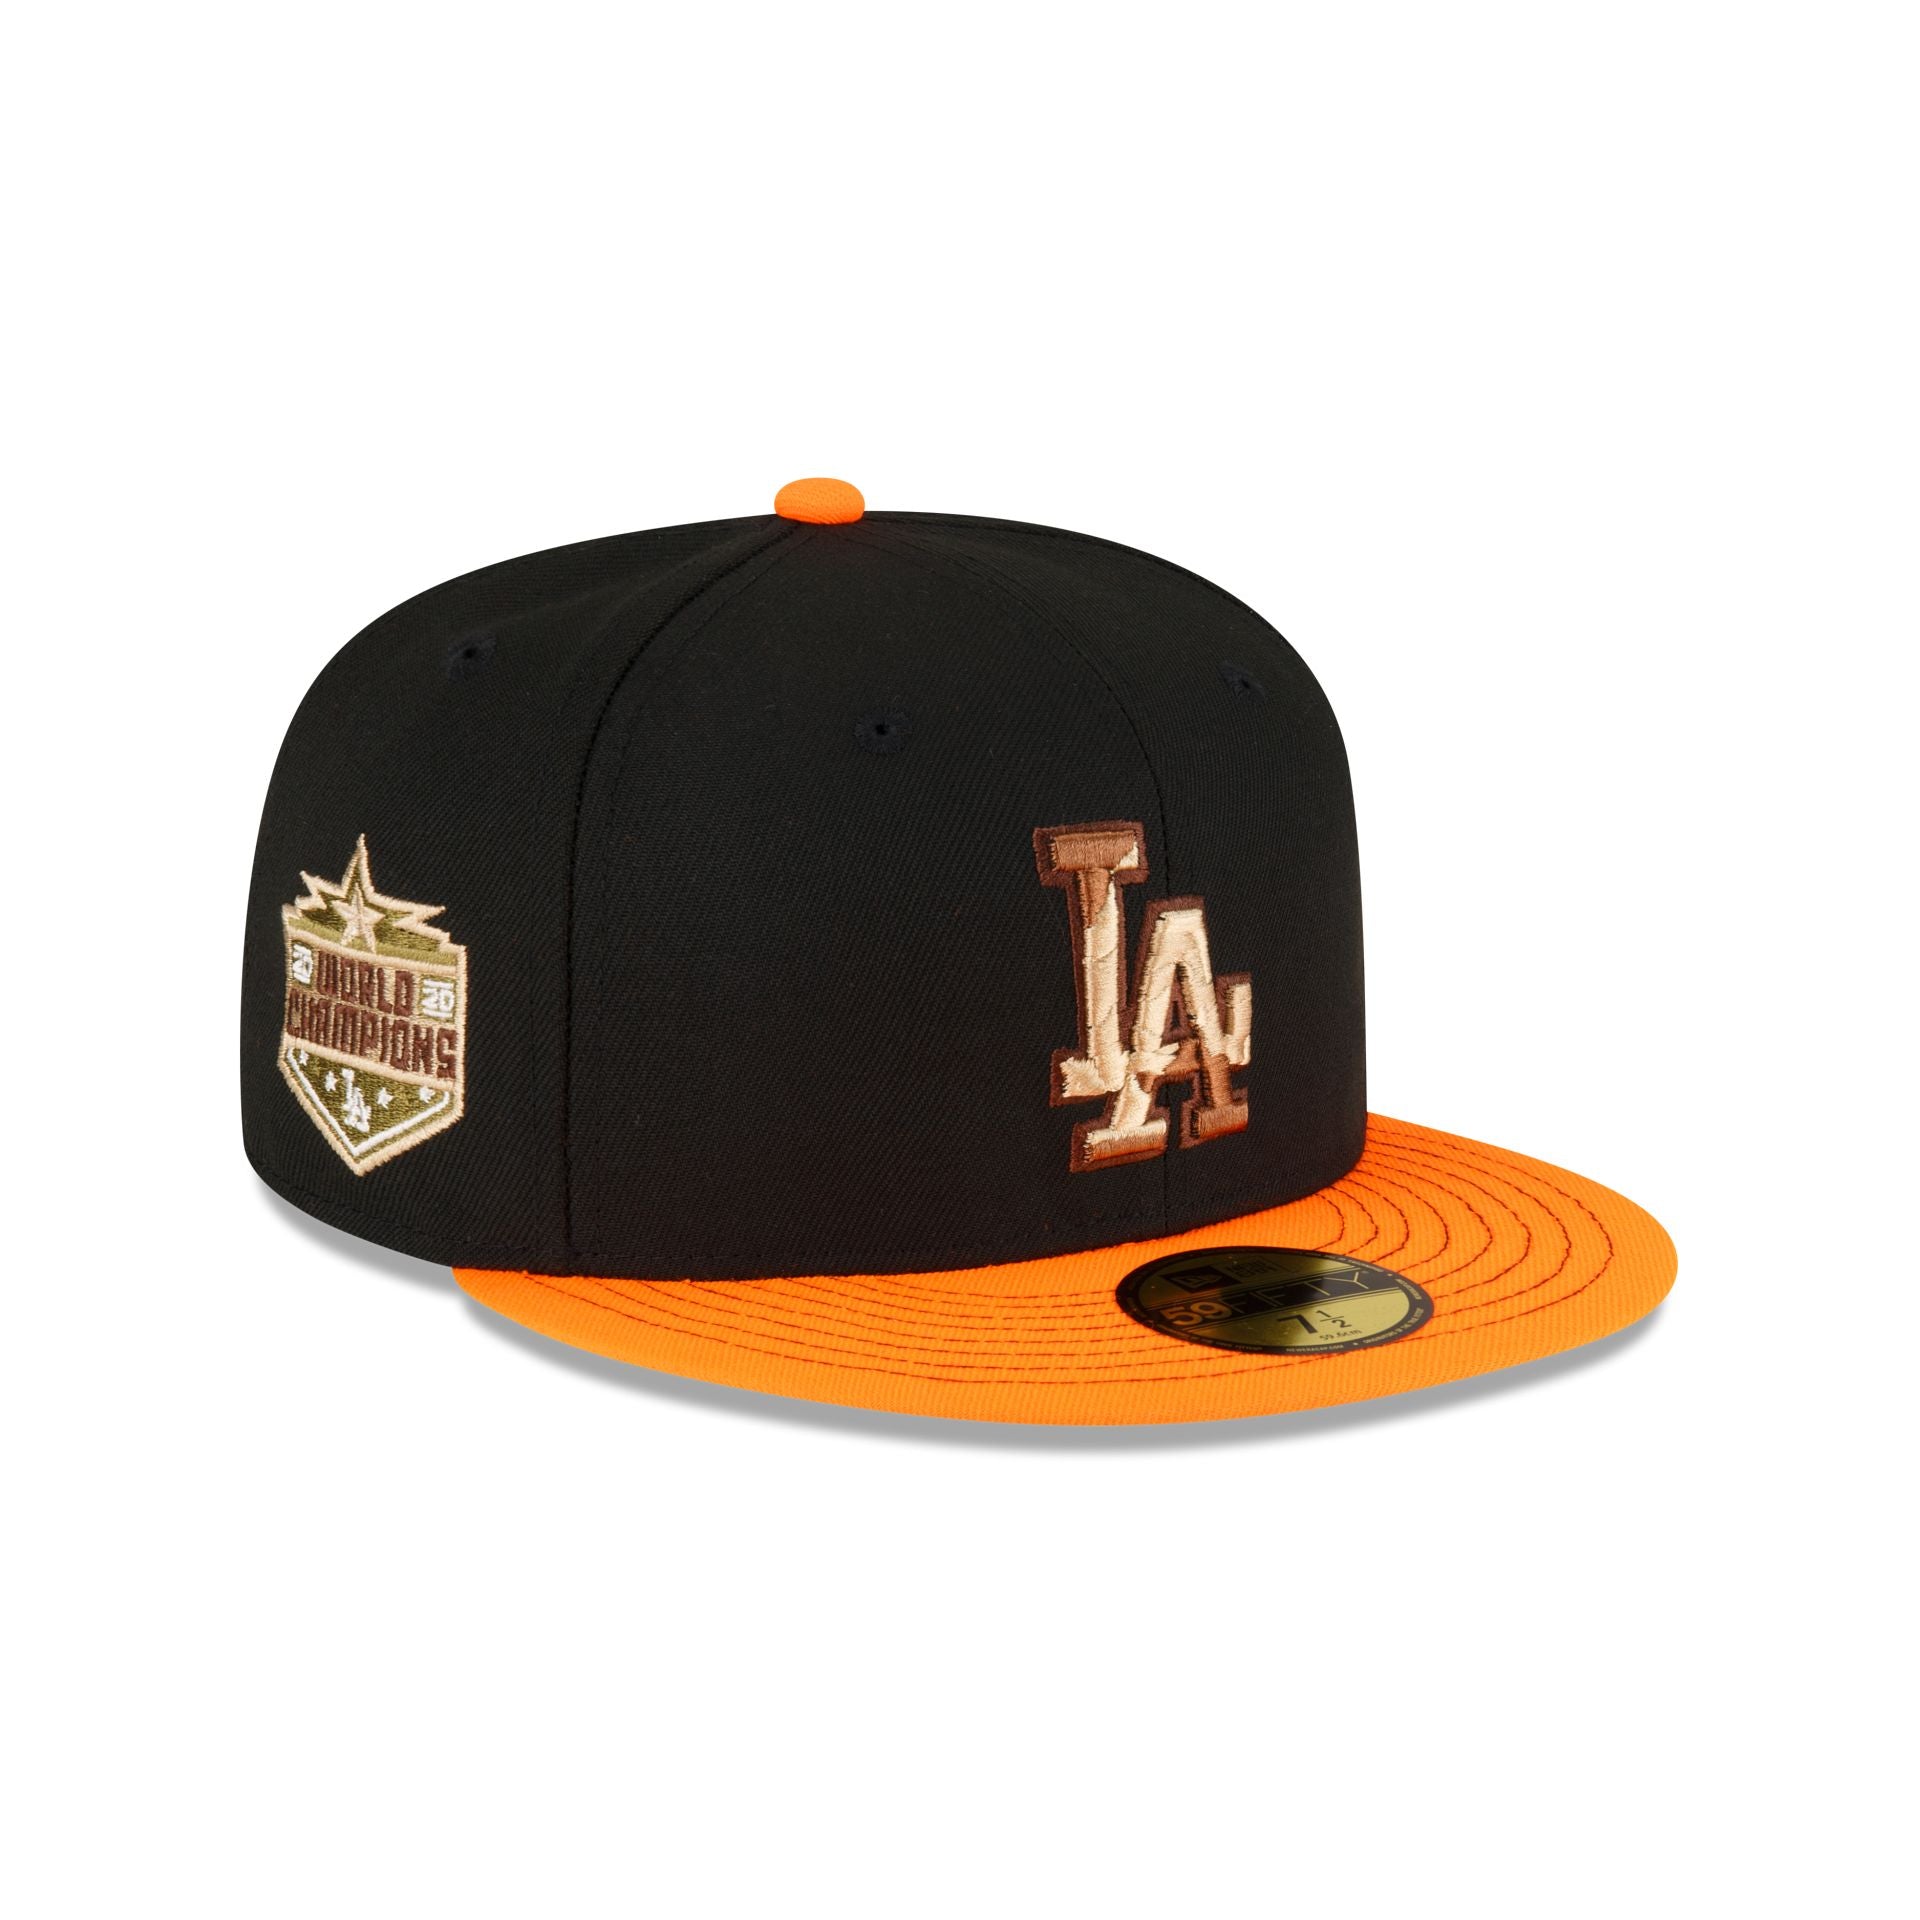 Just Caps Orange Visor Los Angeles Dodgers 59FIFTY Fitted Hat – New Era Cap